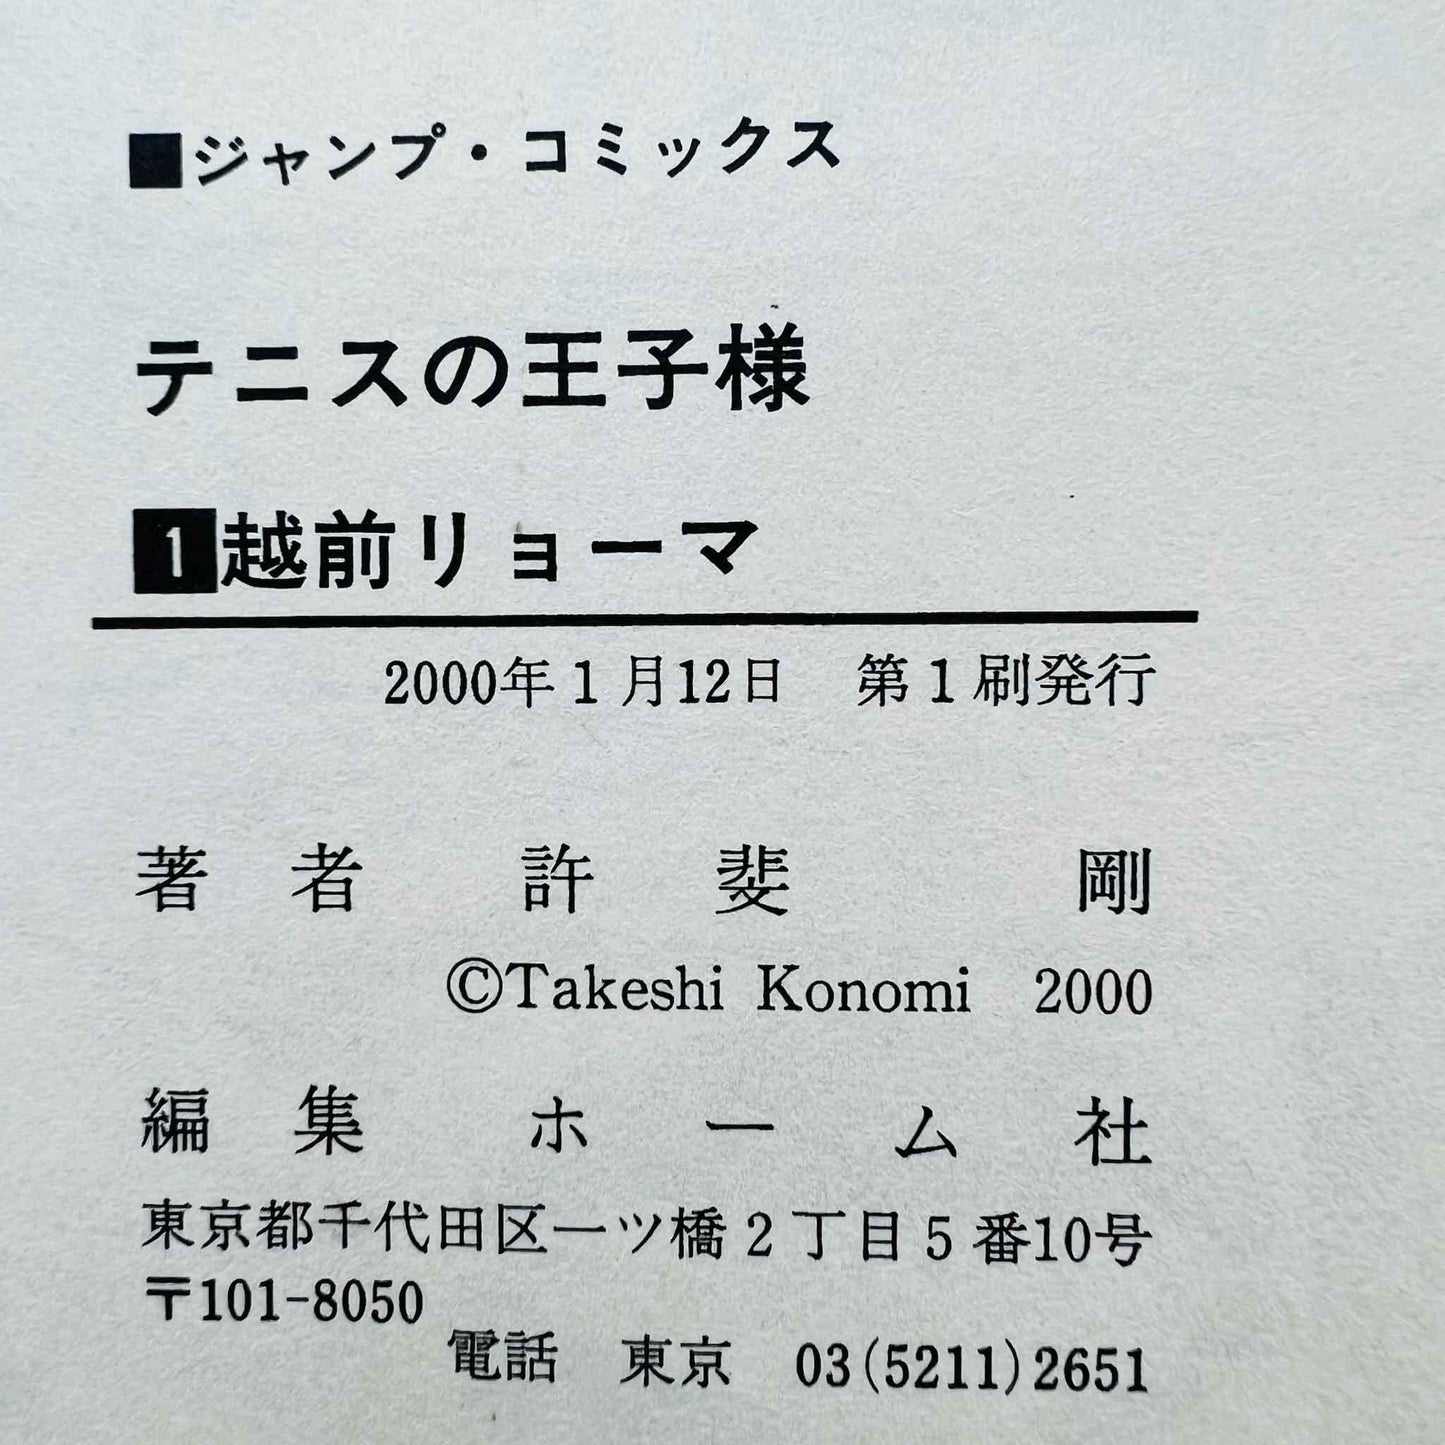 Prince of Tennis - Volume 01 - 1stPrint.net - 1st First Print Edition Manga Store - M-POT-01-001